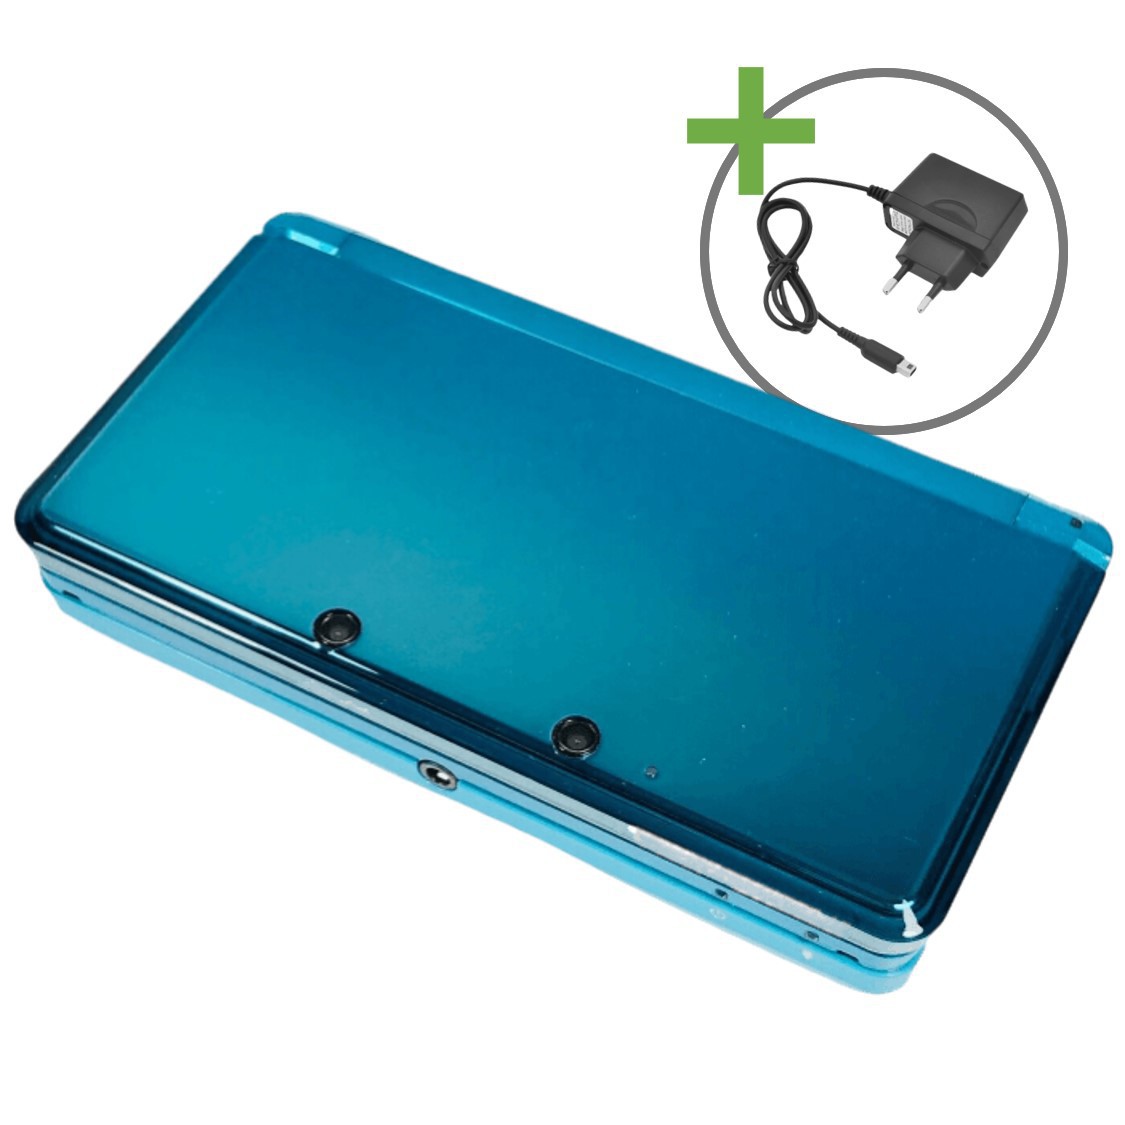 Nintendo 3DS - Aqua Blue [Complete] - Nintendo 3DS Hardware - 3